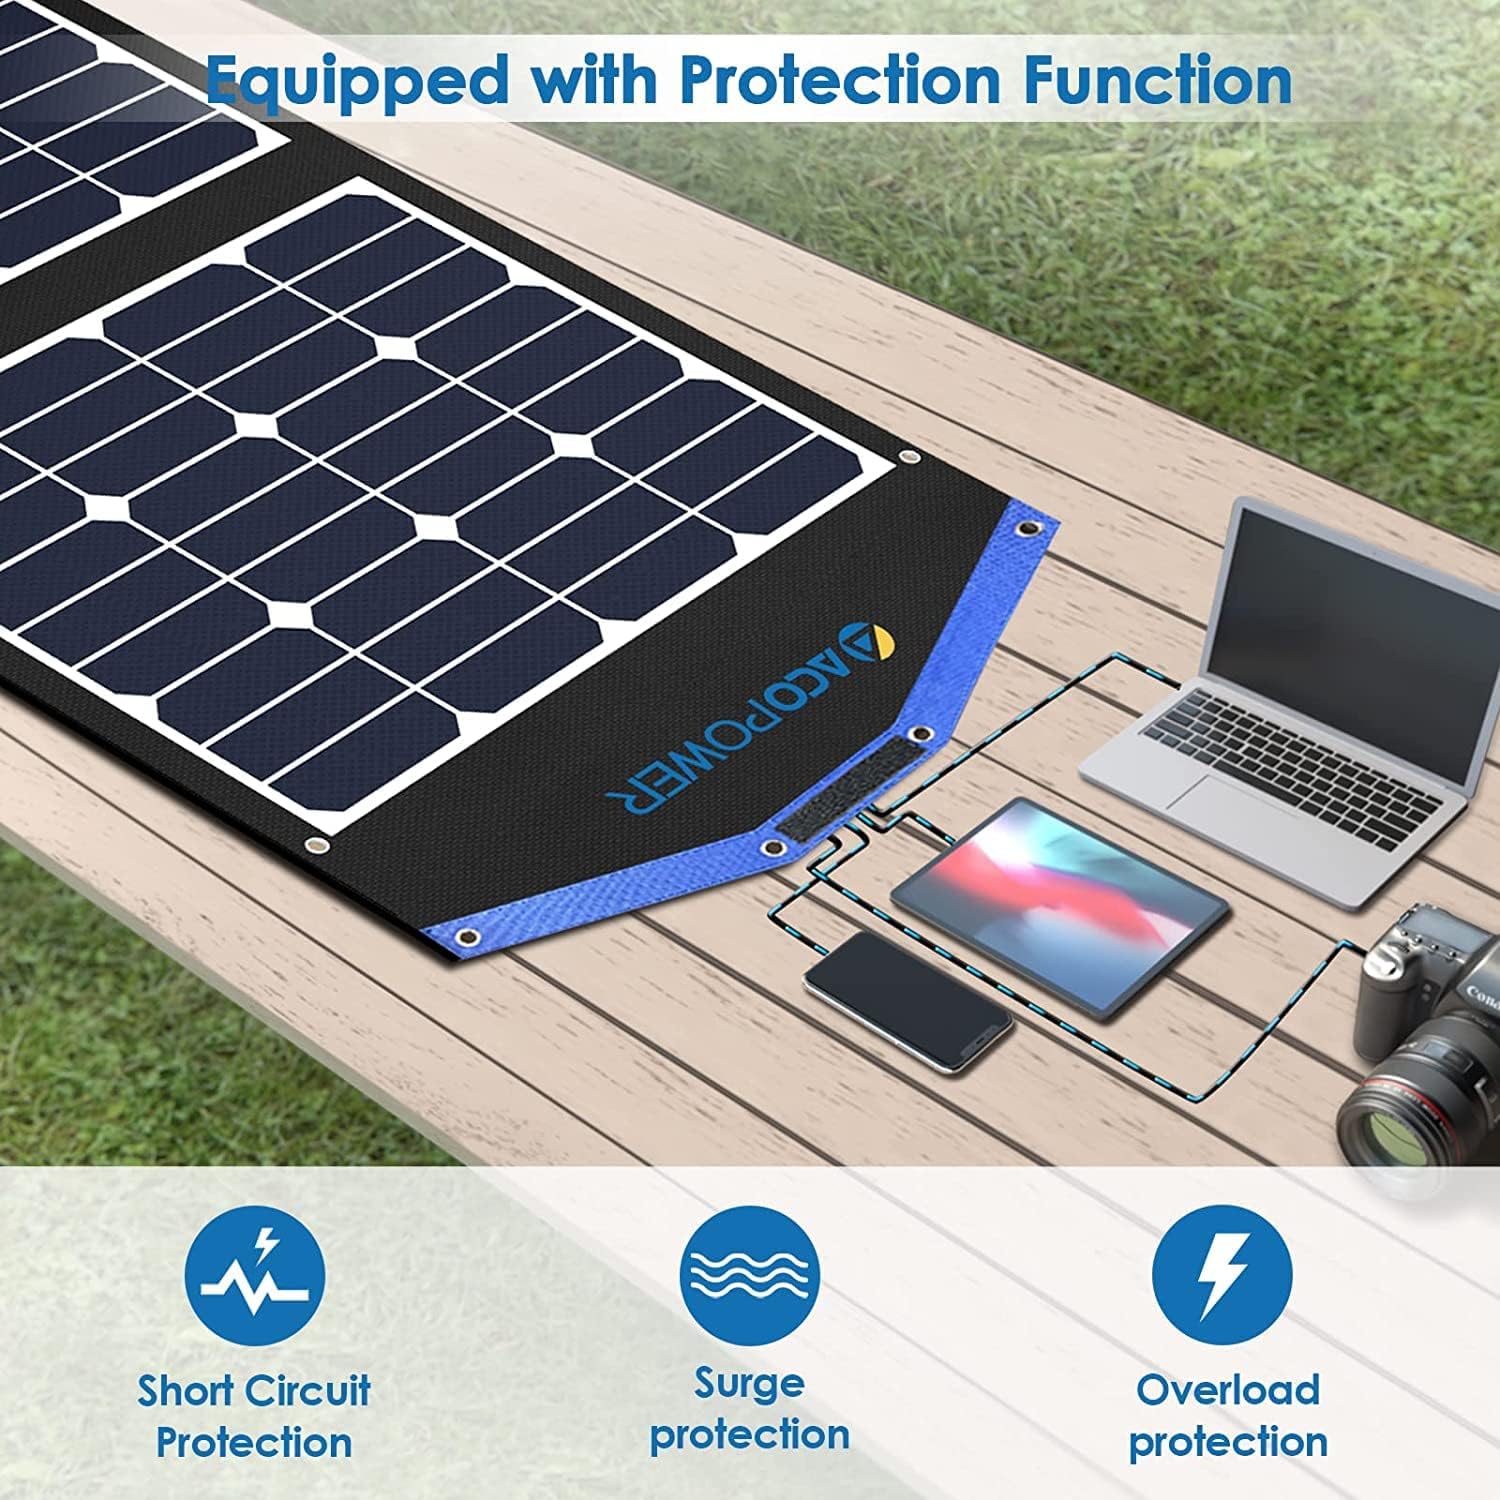 Acopower Solar Cooler Features